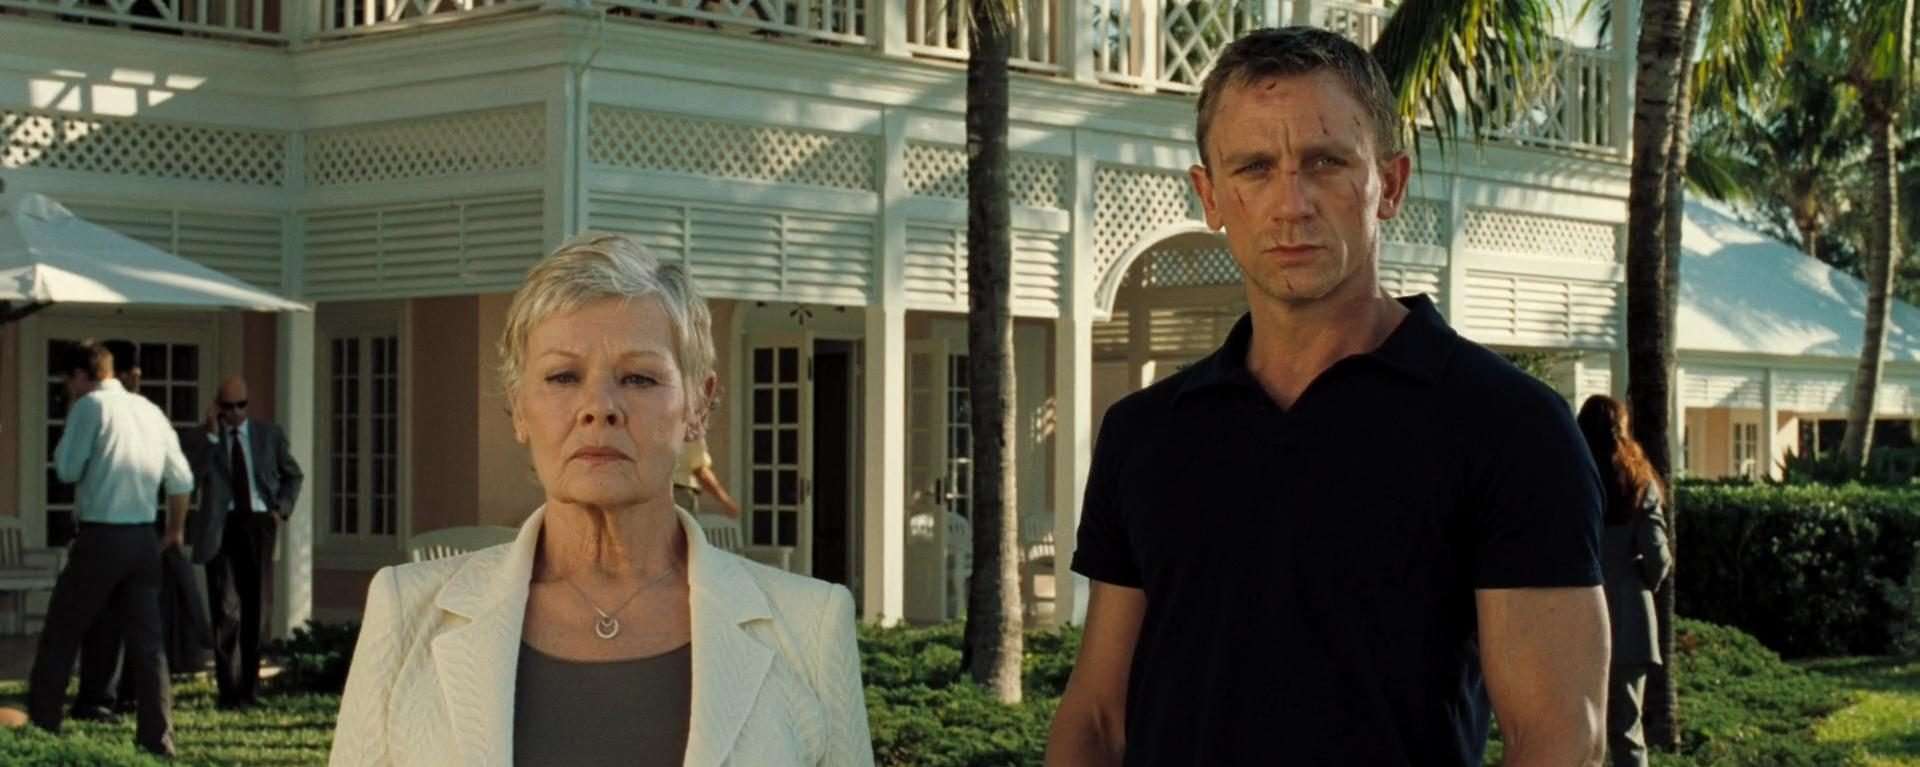 Dame Judy Dench as M an Daniel Craig as James Bond in "Casino Royale"